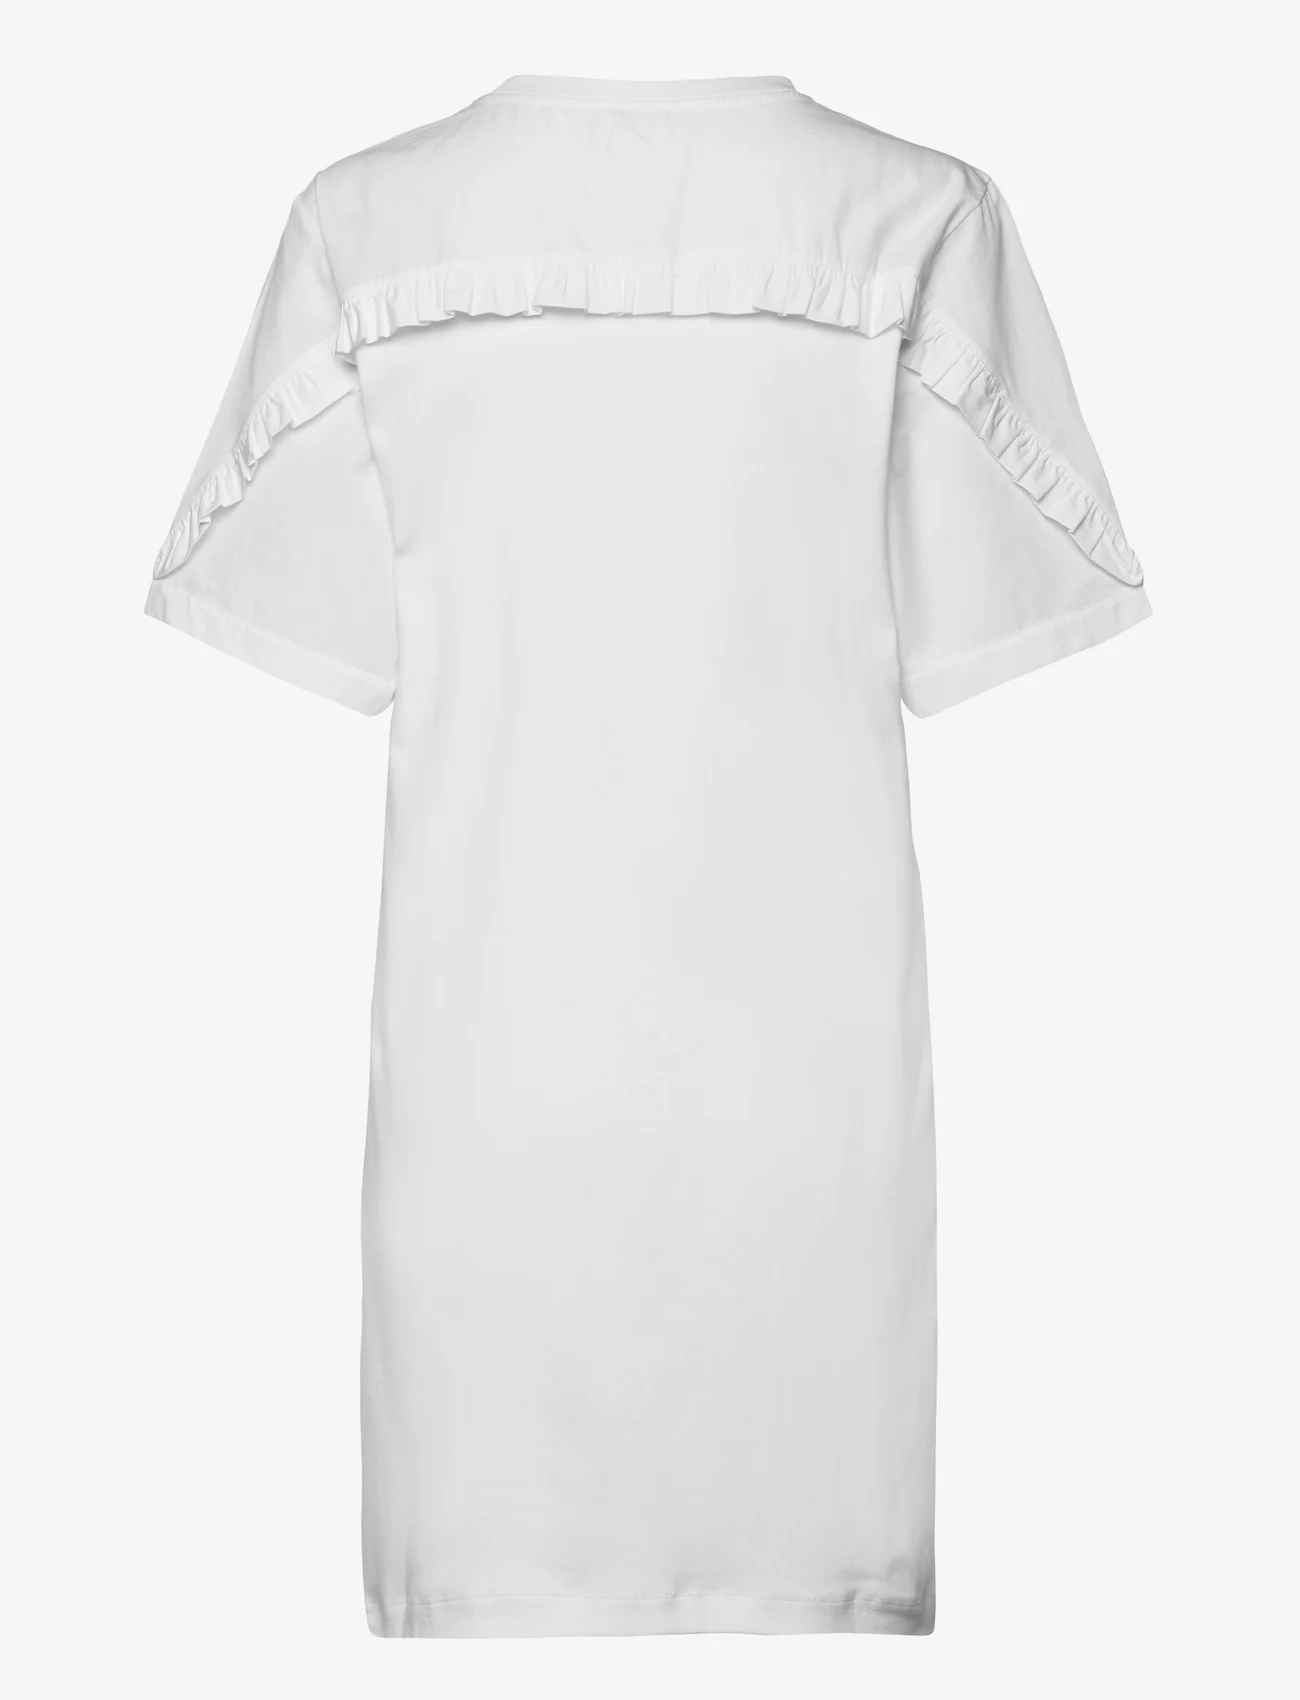 See by Chloé - Dress - t-shirt-kleider - white - 1